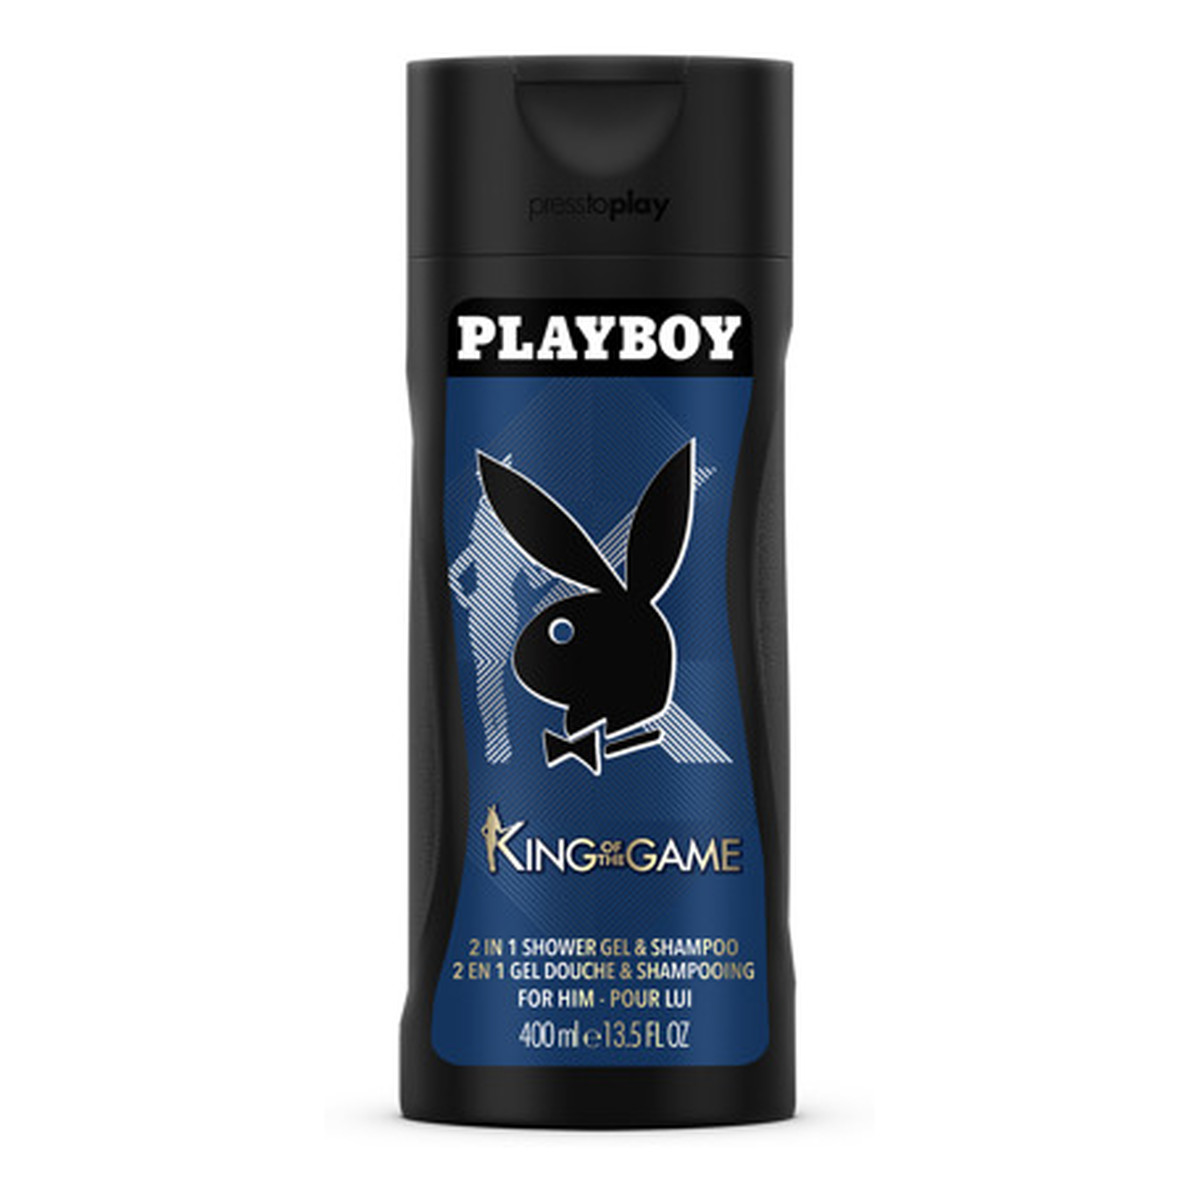 Playboy King of the Game żel pod prysznic 2w1 400ml